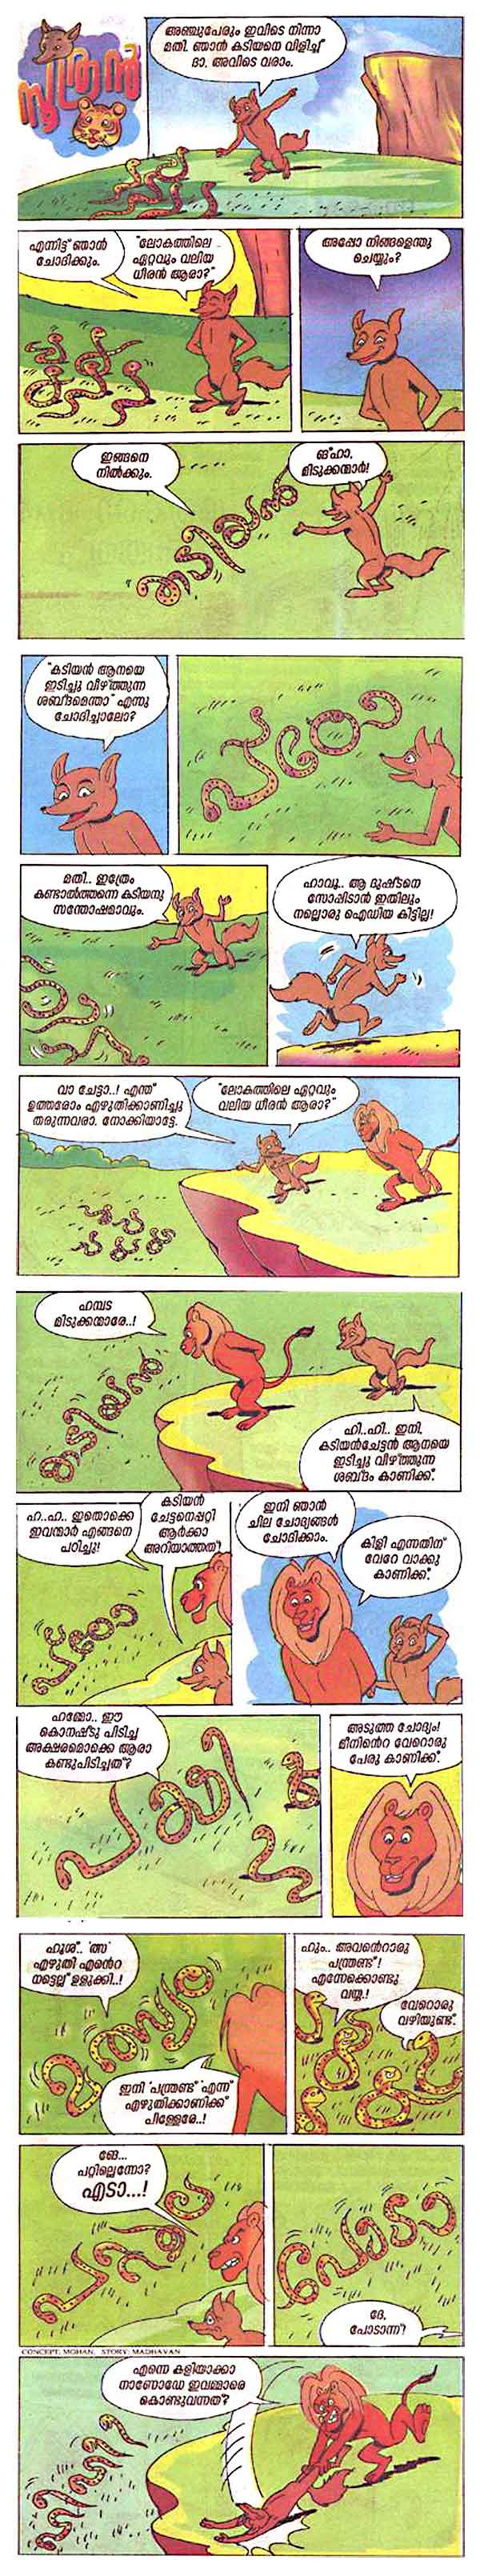 Spelling snakes in Soothran comics | HINDI RINNY